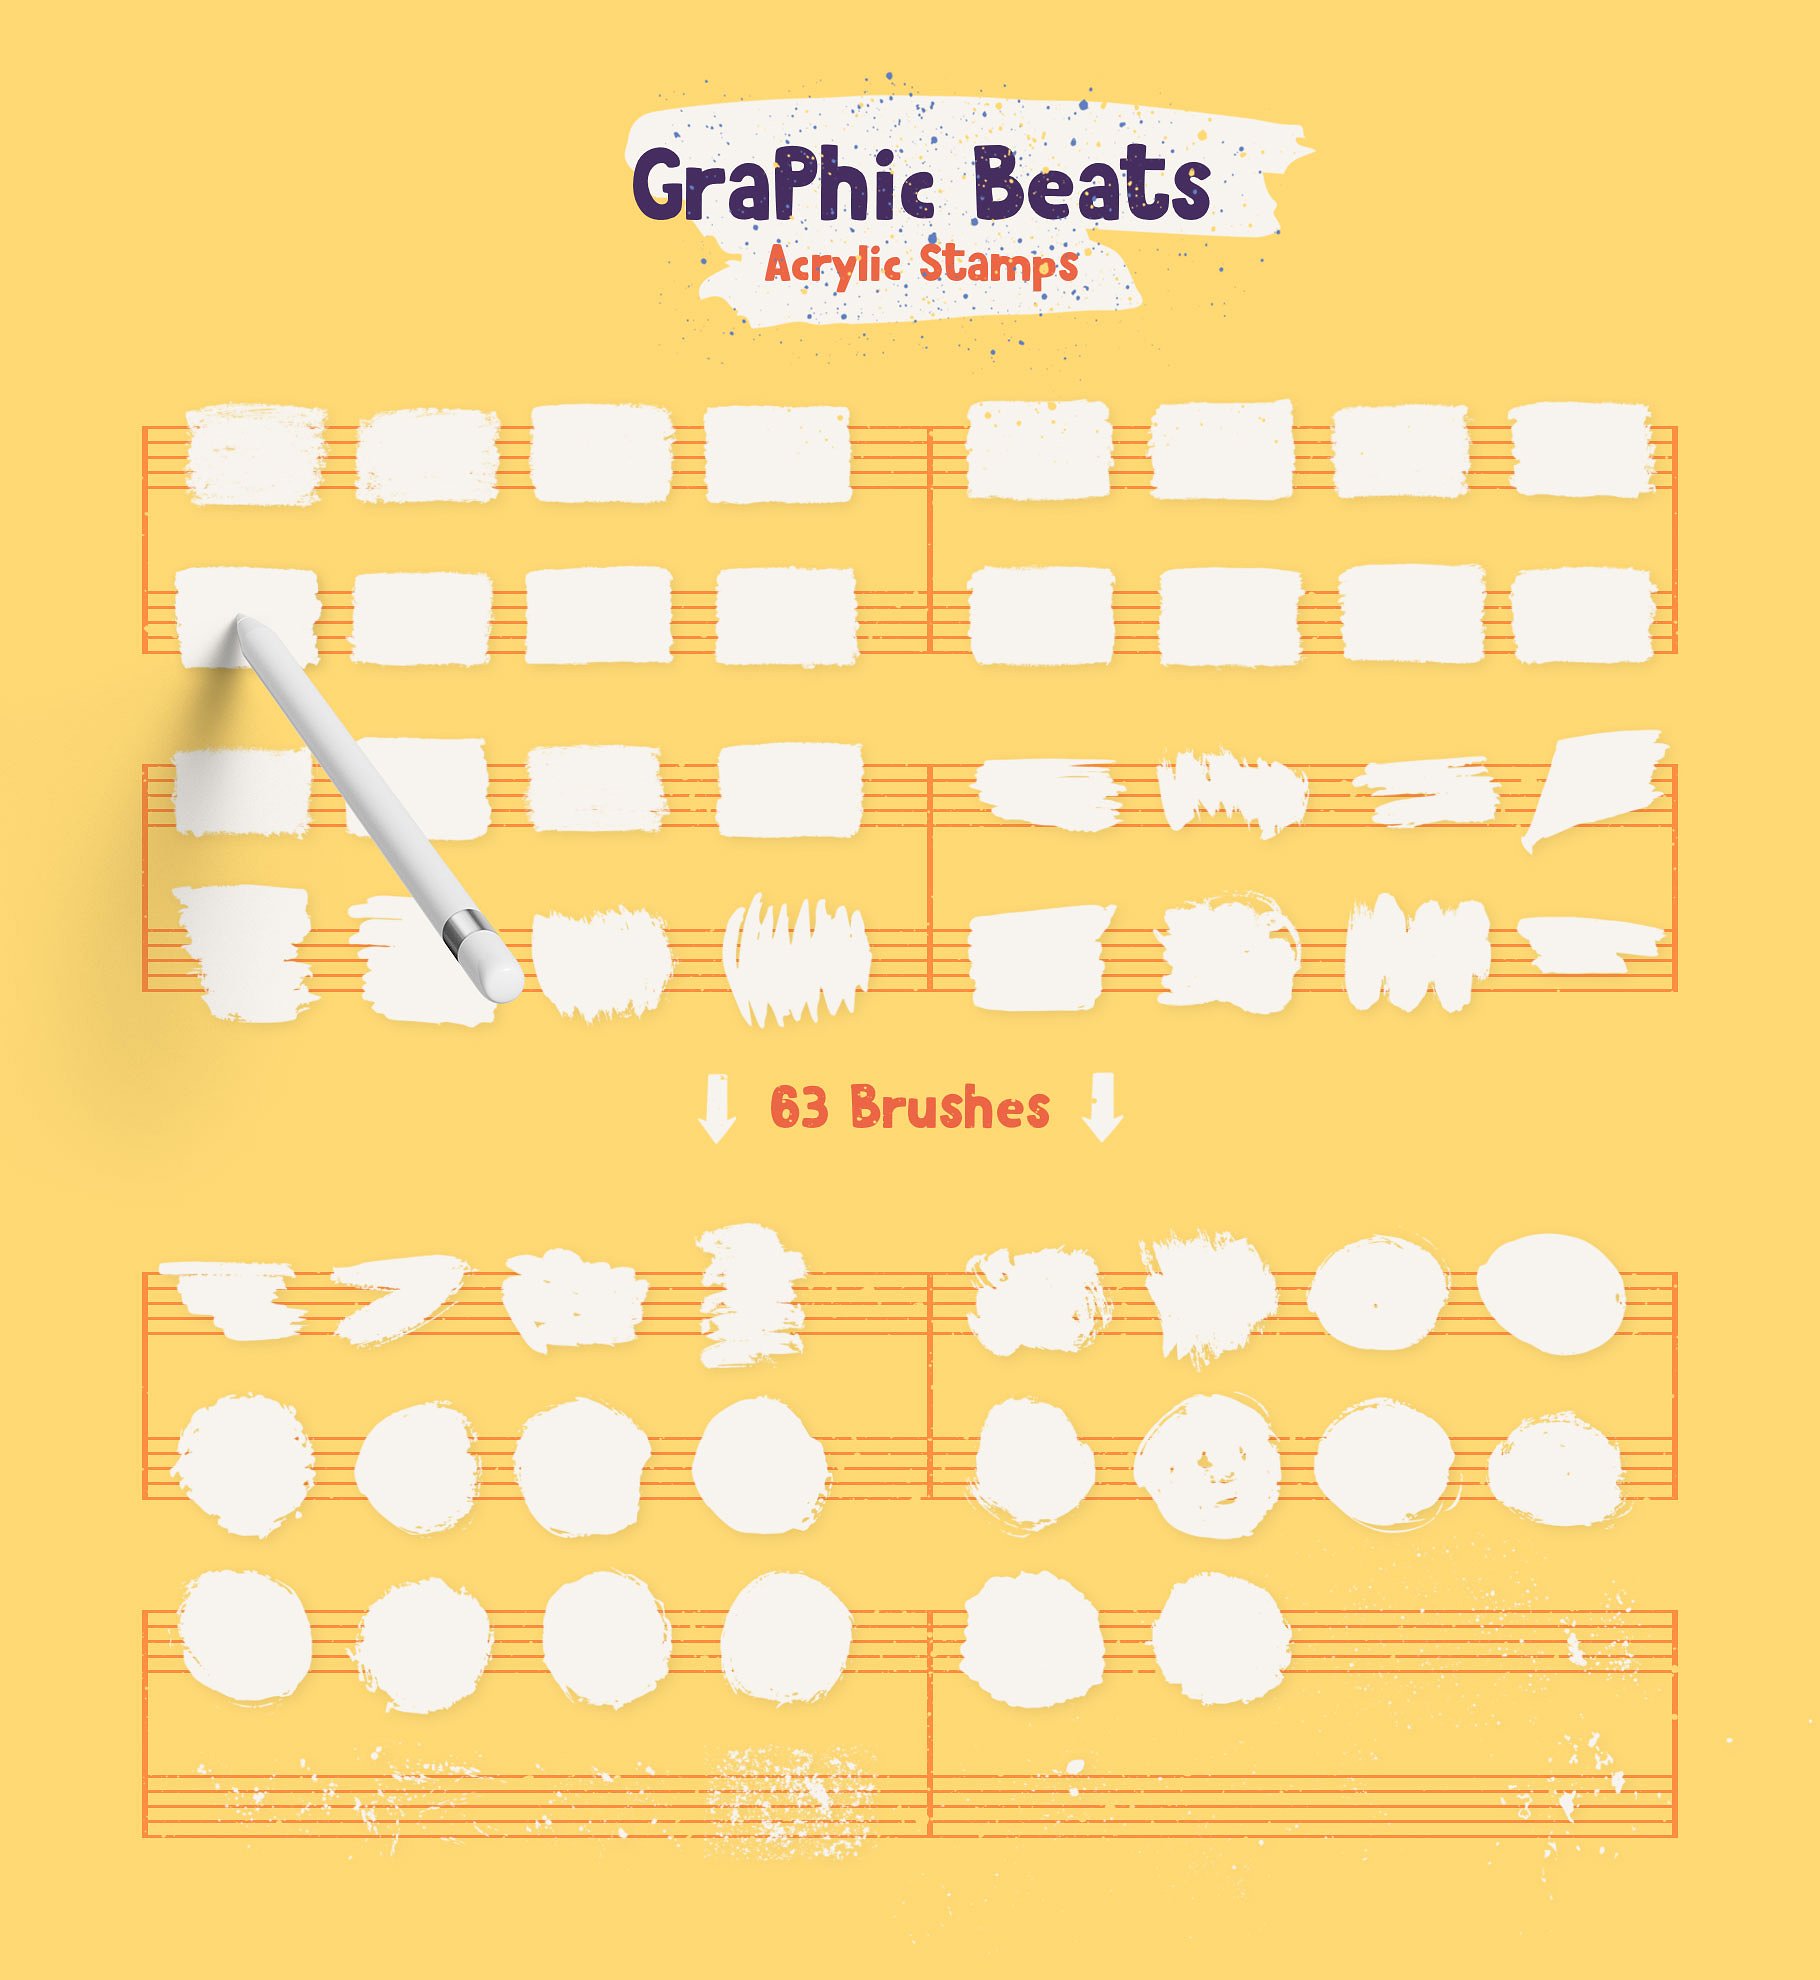 一大批艺术笔刷合辑下载 Graphic Beats Brushes for ProCreate [abr]插图(10)